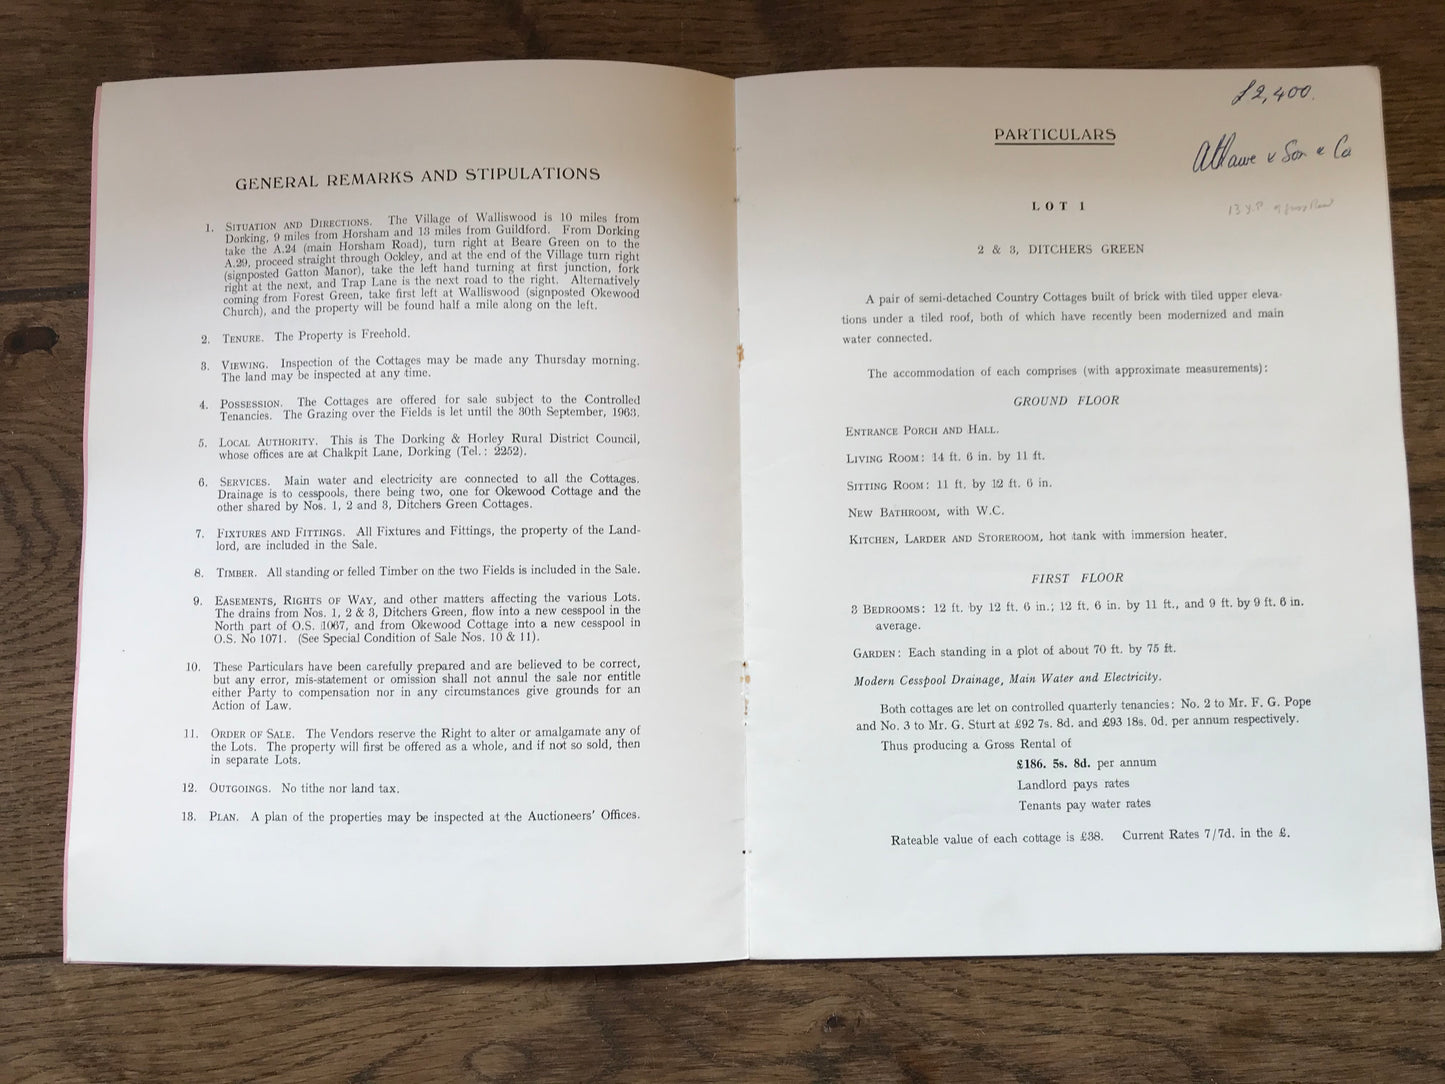 Okewood & Ditchers Green Cottages, Walliswood, Ockley. 1963 Sales Particulars